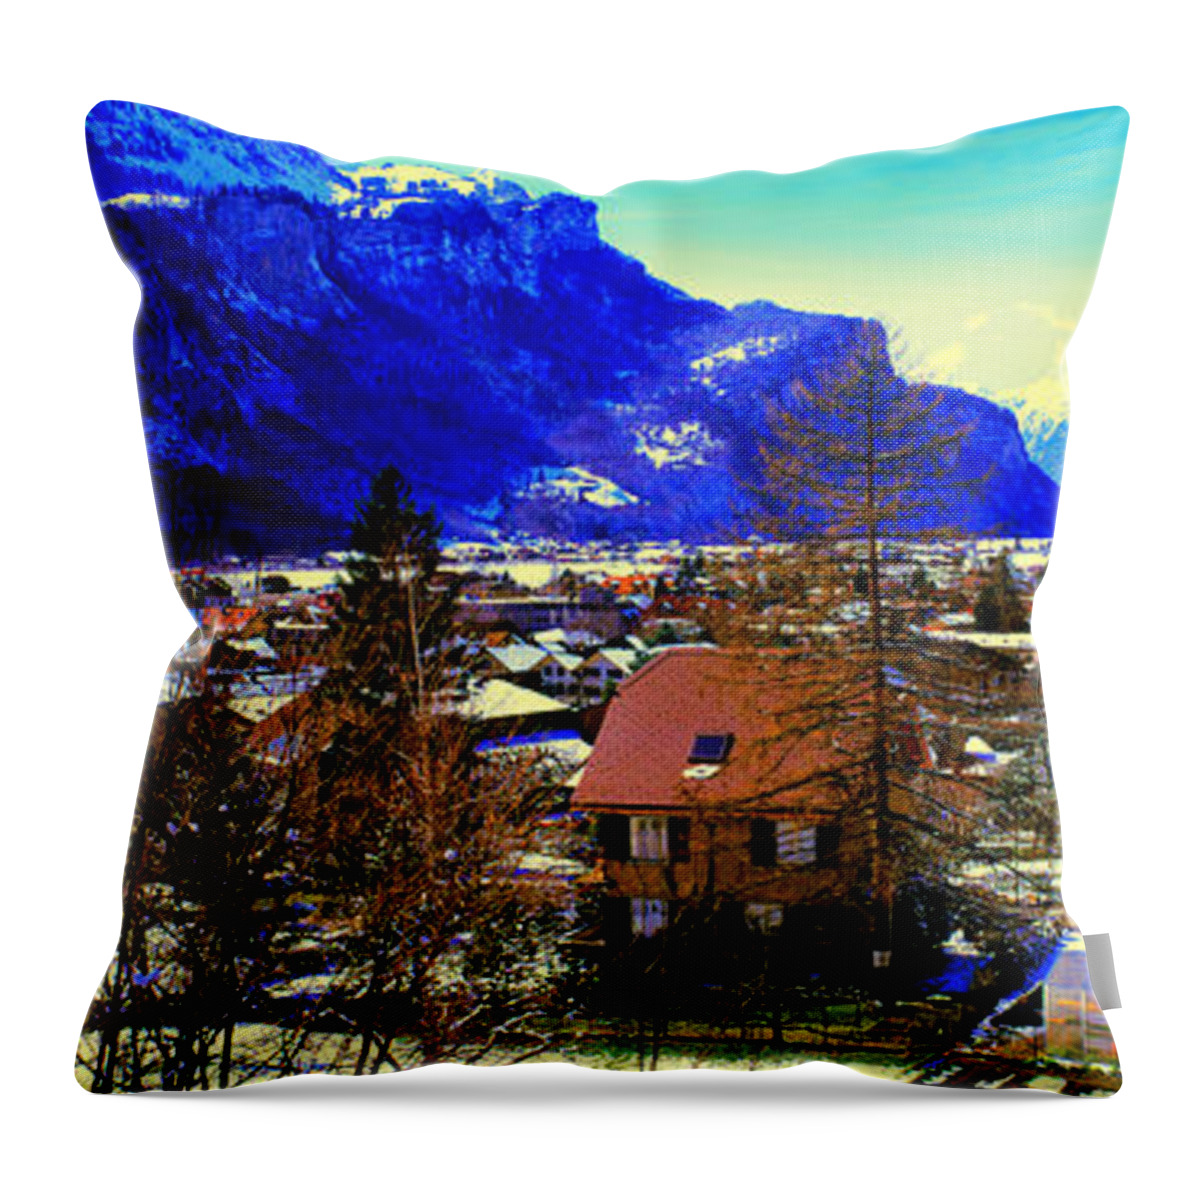 Meiringen Throw Pillow featuring the photograph Meiringen Switzerland Alpine Village by Tom Jelen